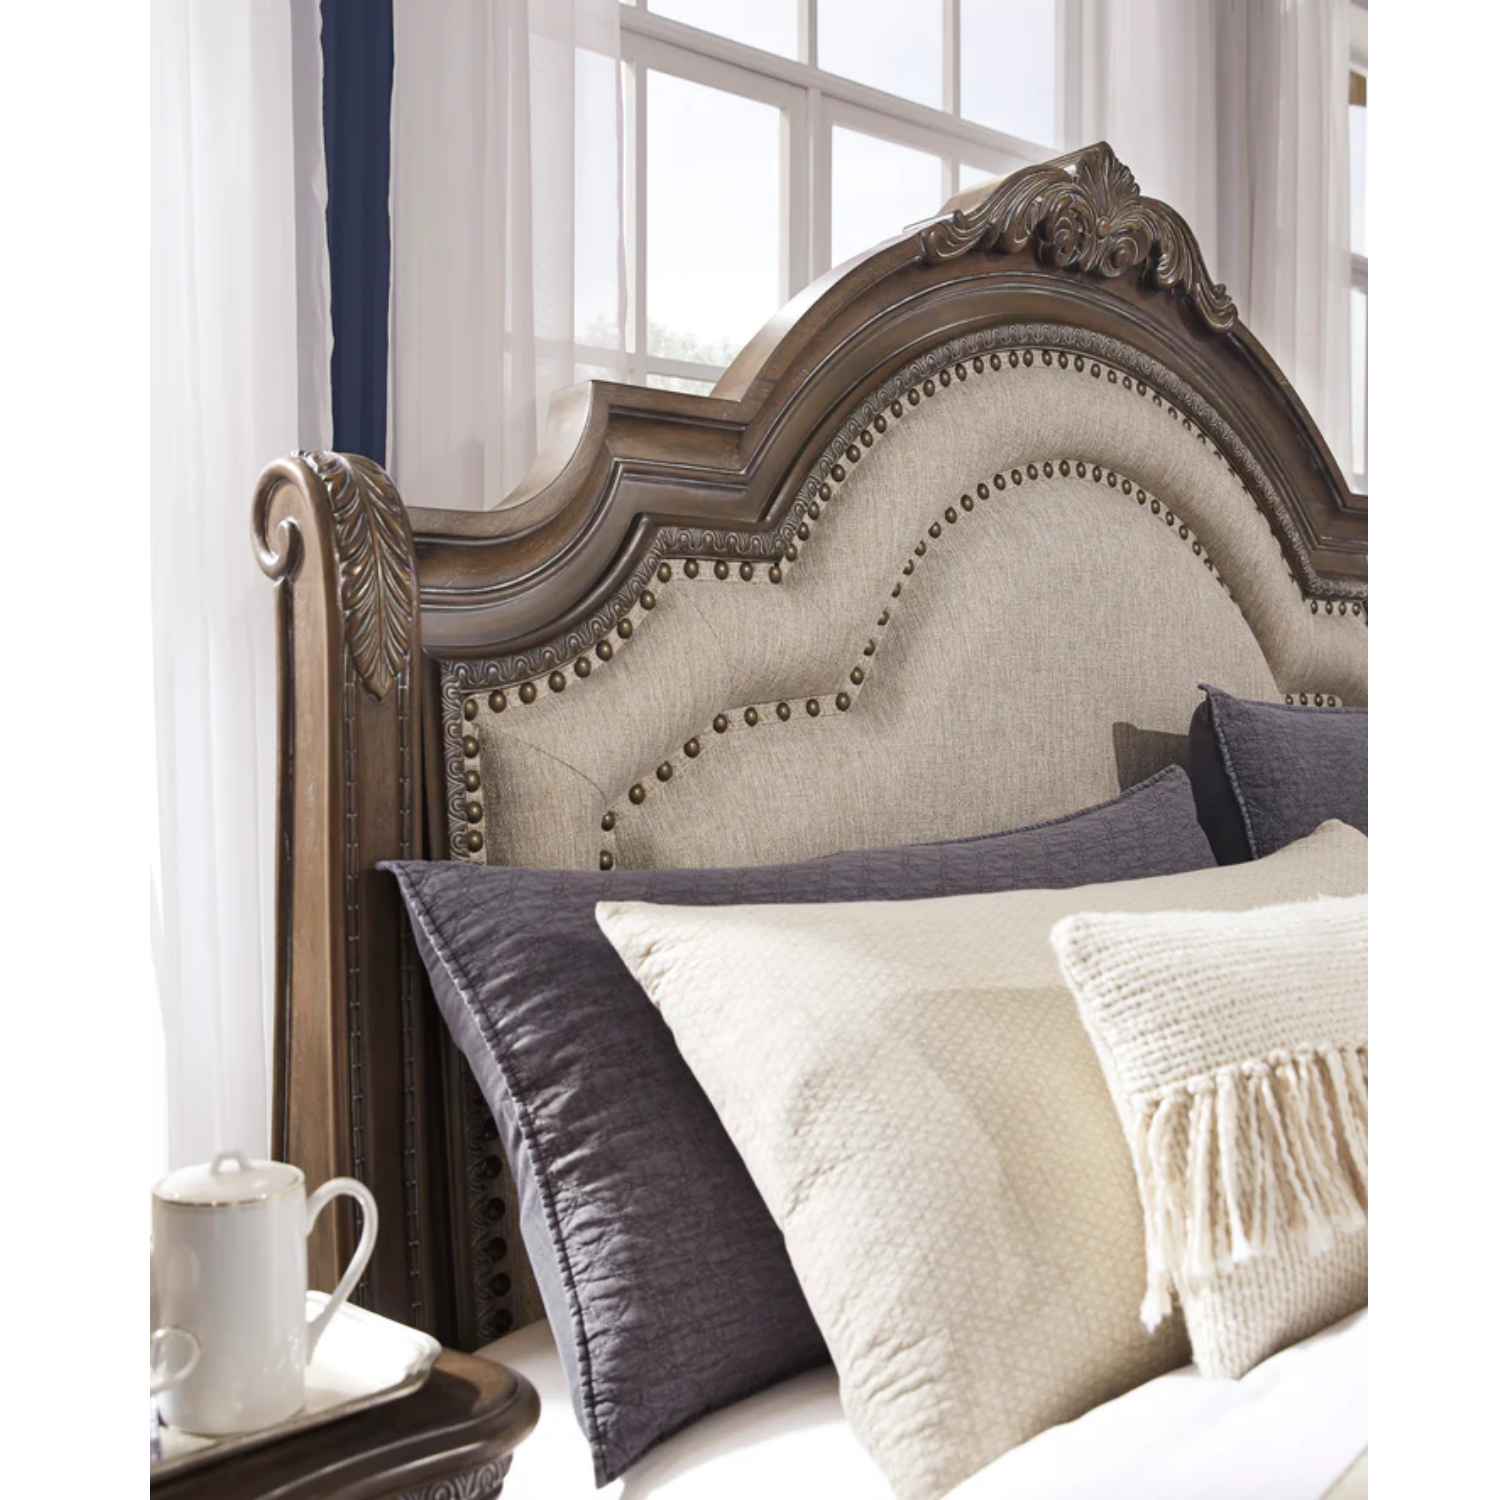 Charmond Brown Upholstered Sleigh Bedroom Set